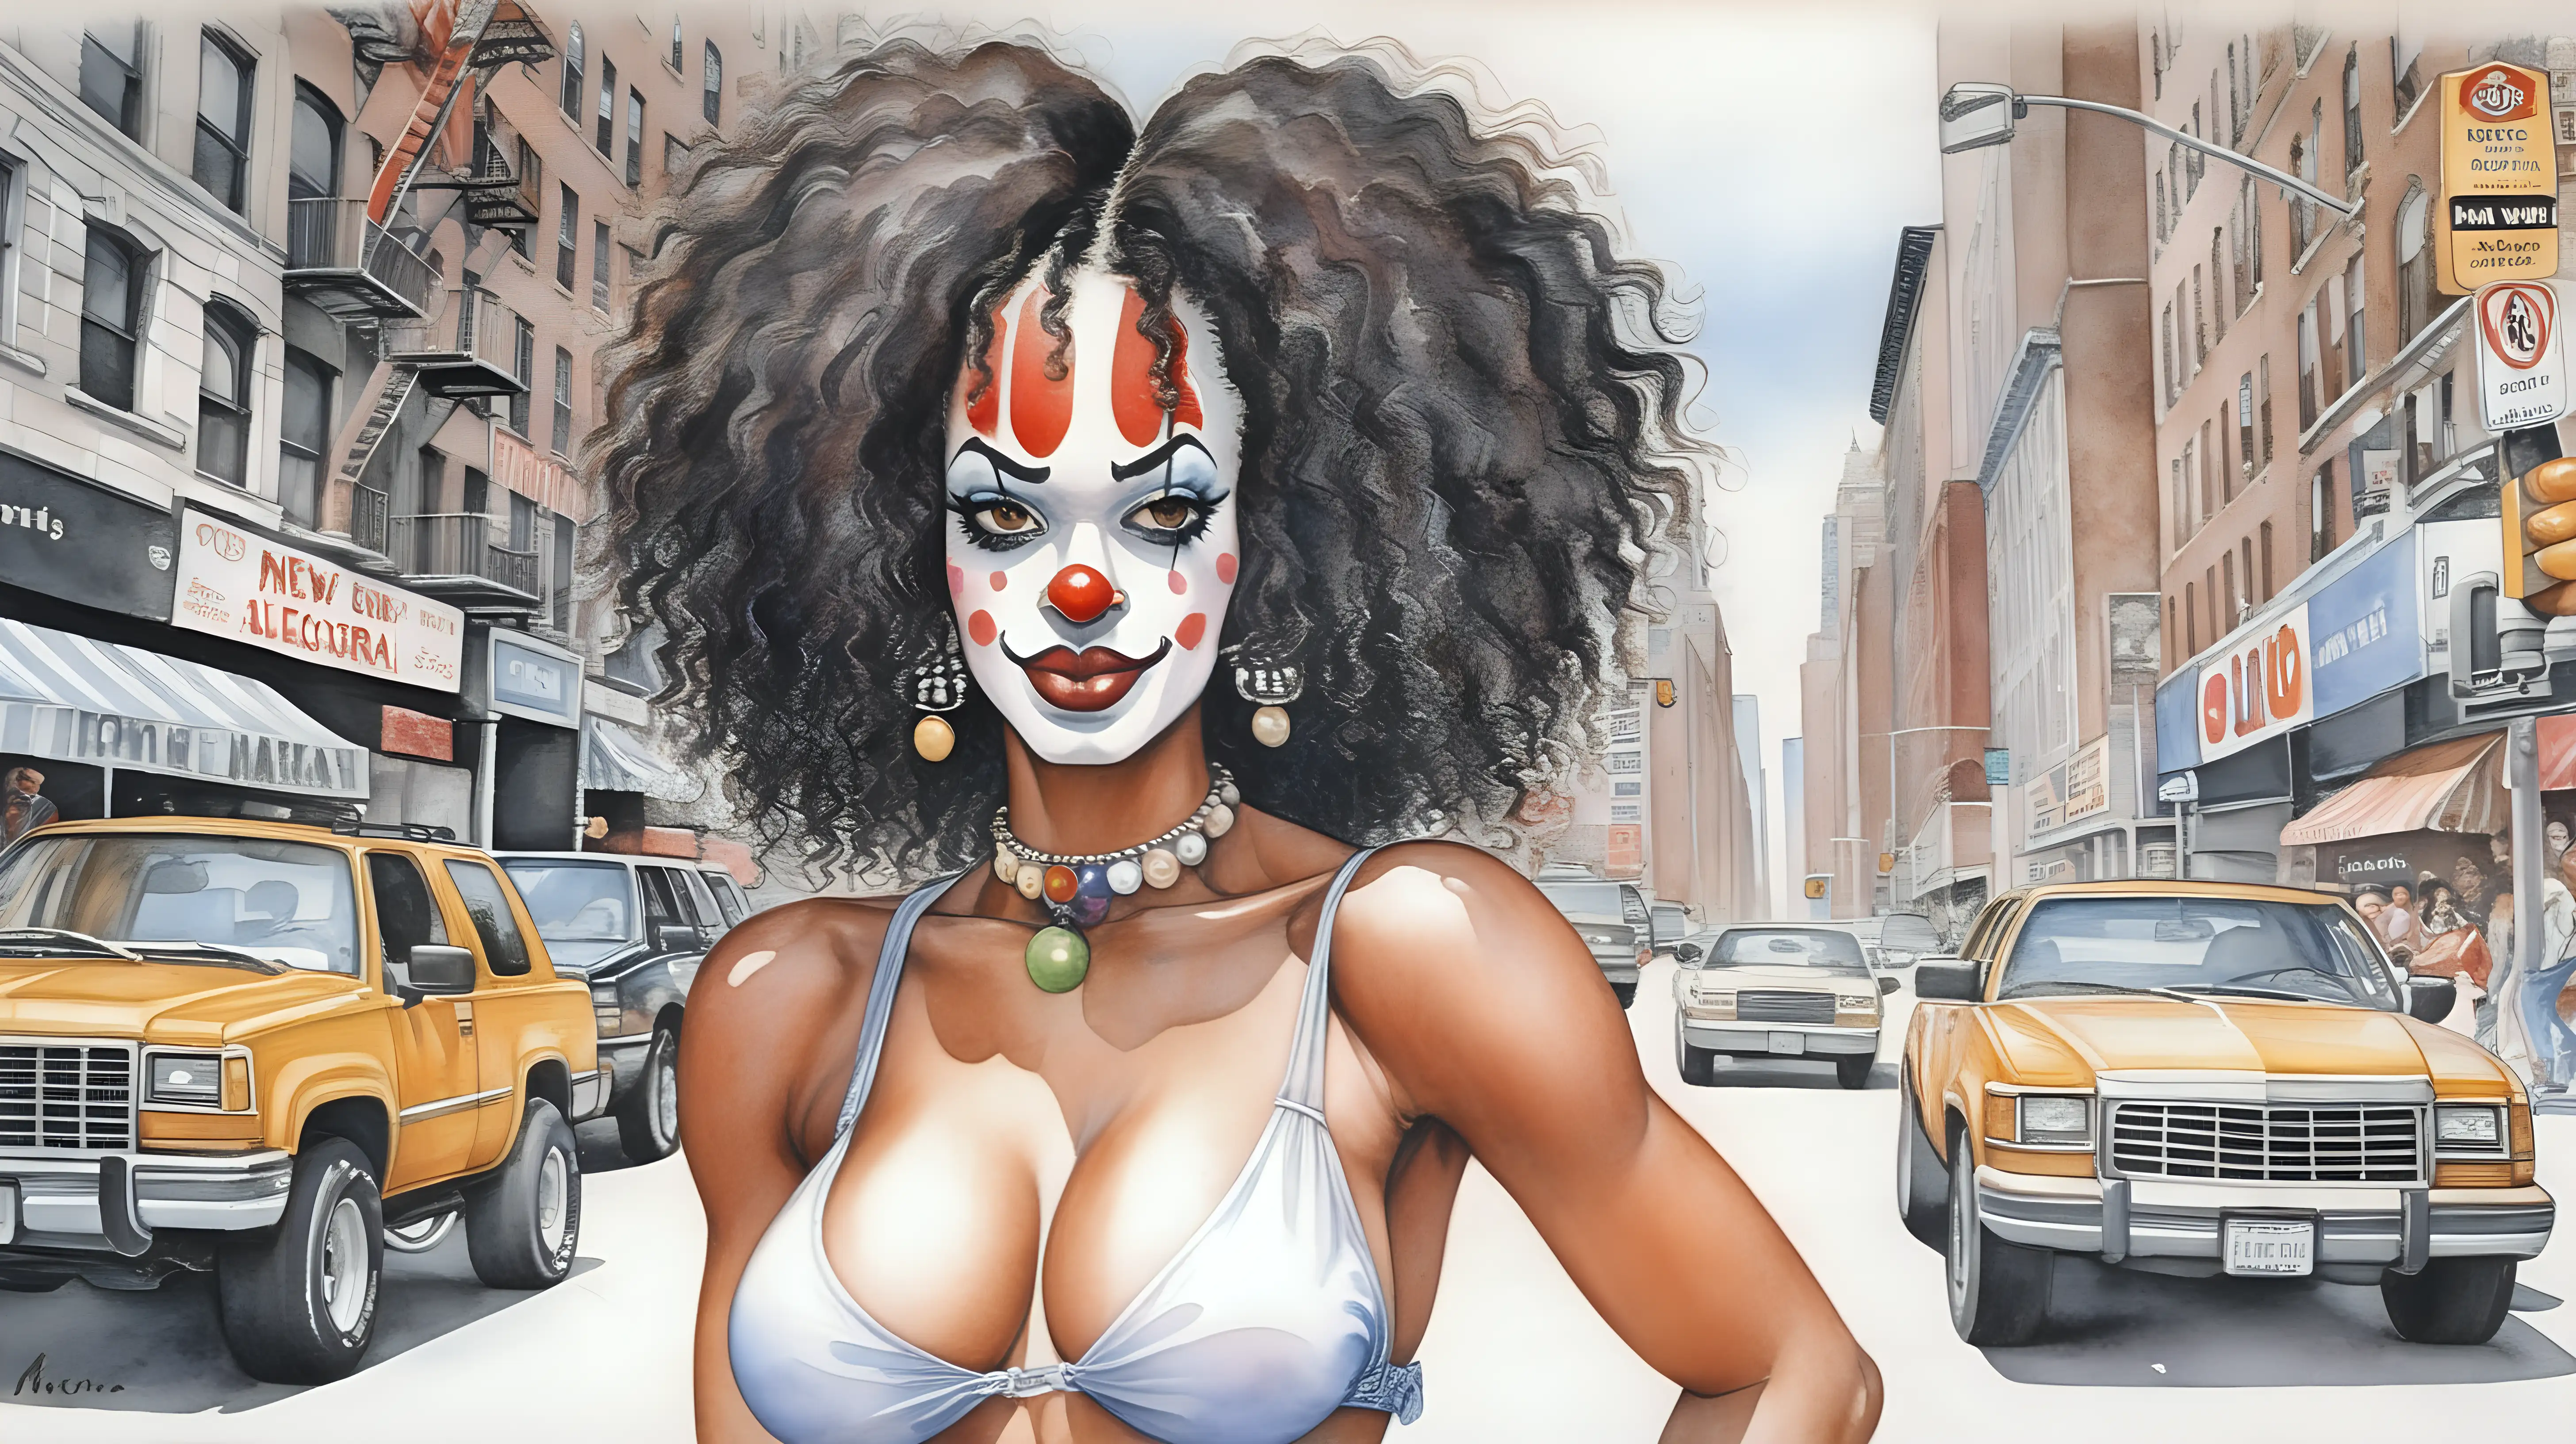 Sensual Mulatto Woman Clown in New York Street Milo Manara Style Watercolor Art